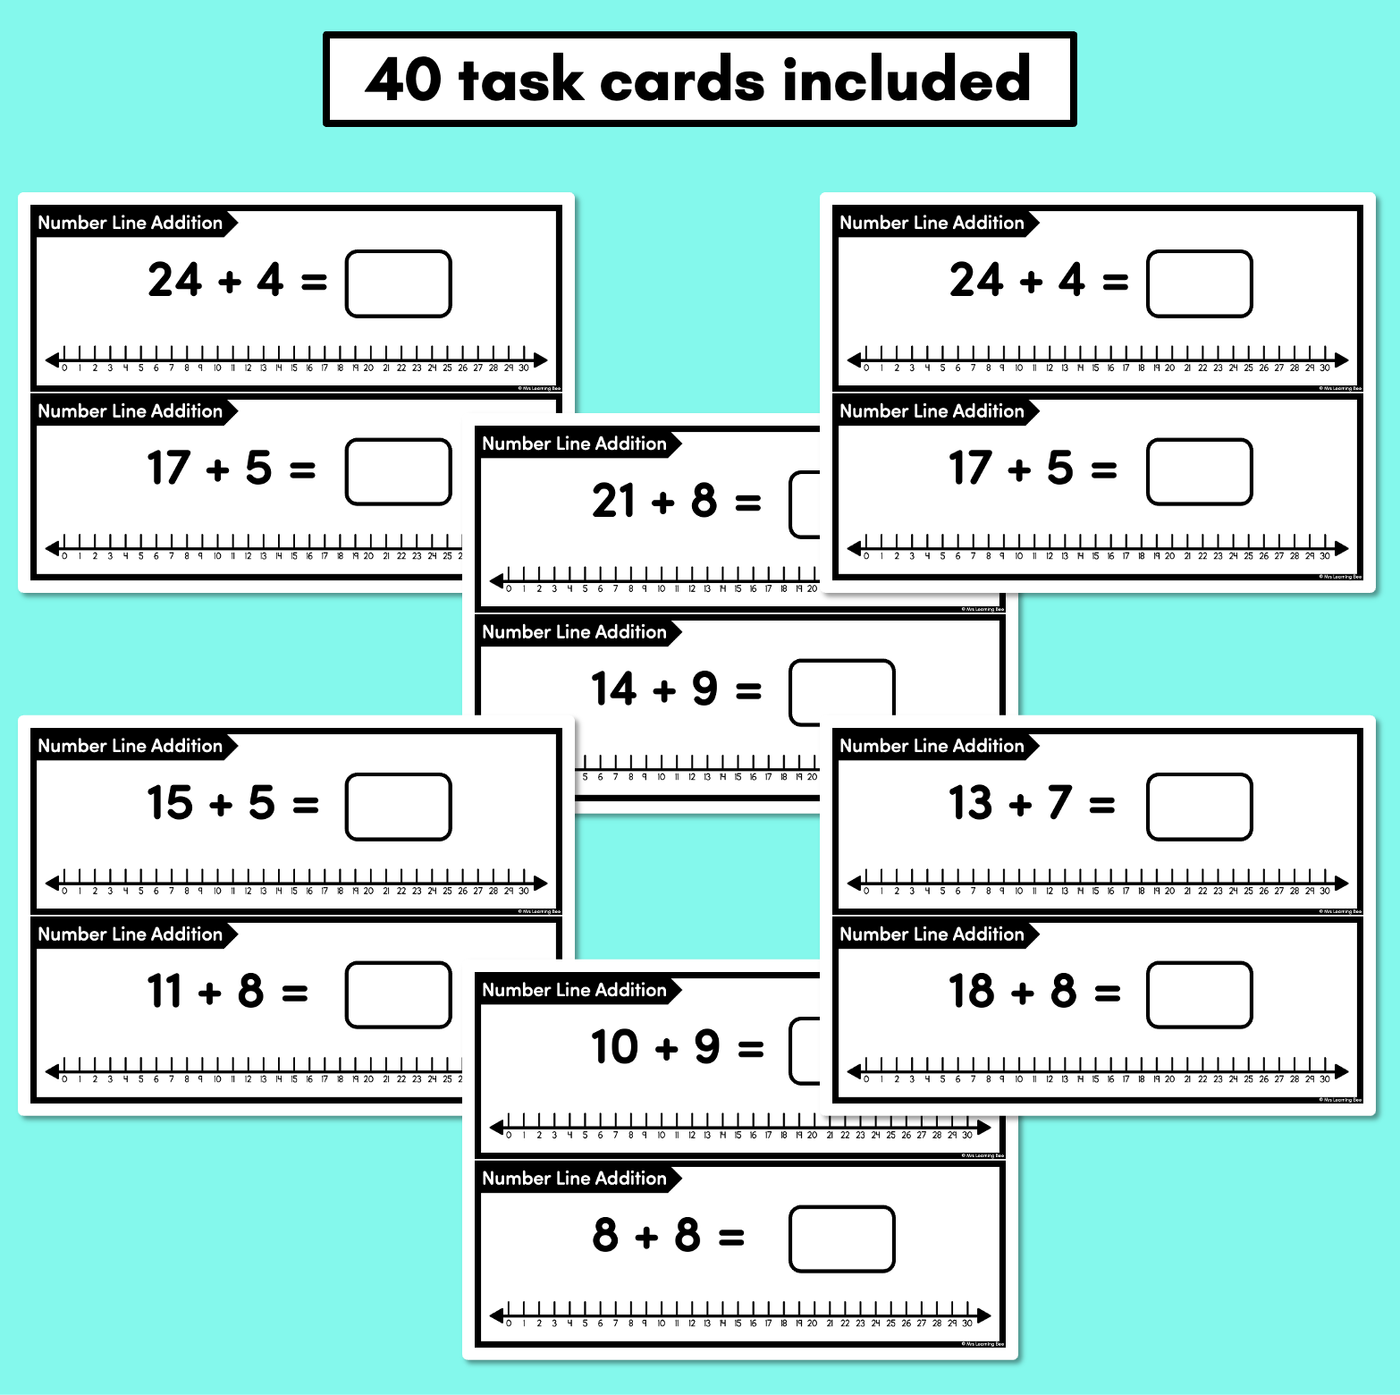 Number Line Addition Task Cards Level 1: 1-Digit & 2-Digit Addition (Jump Strategy)